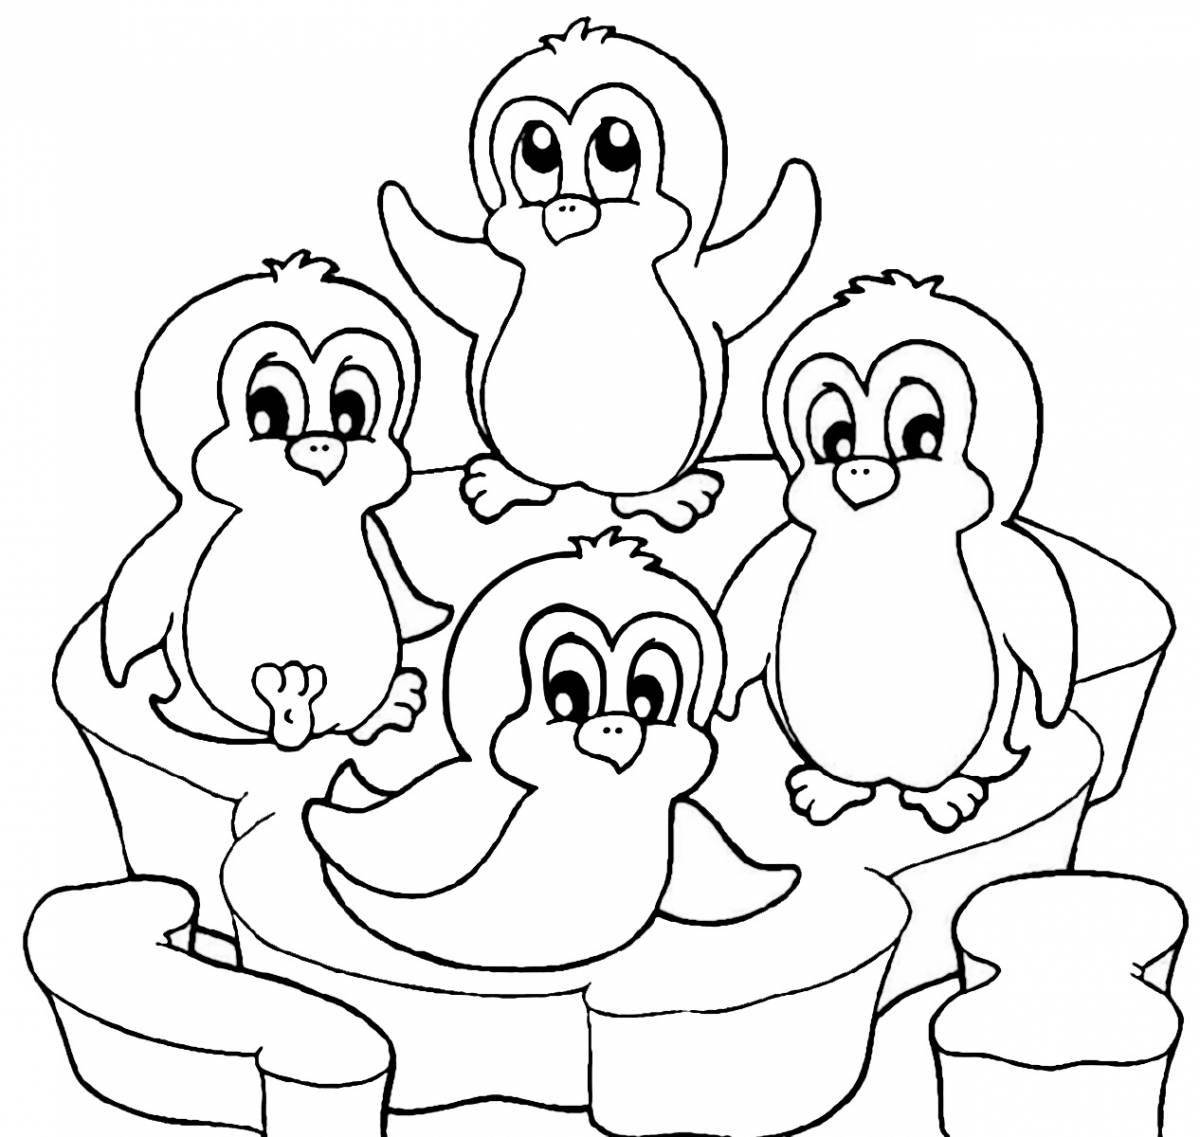 Joyful penguin coloring pages for kids